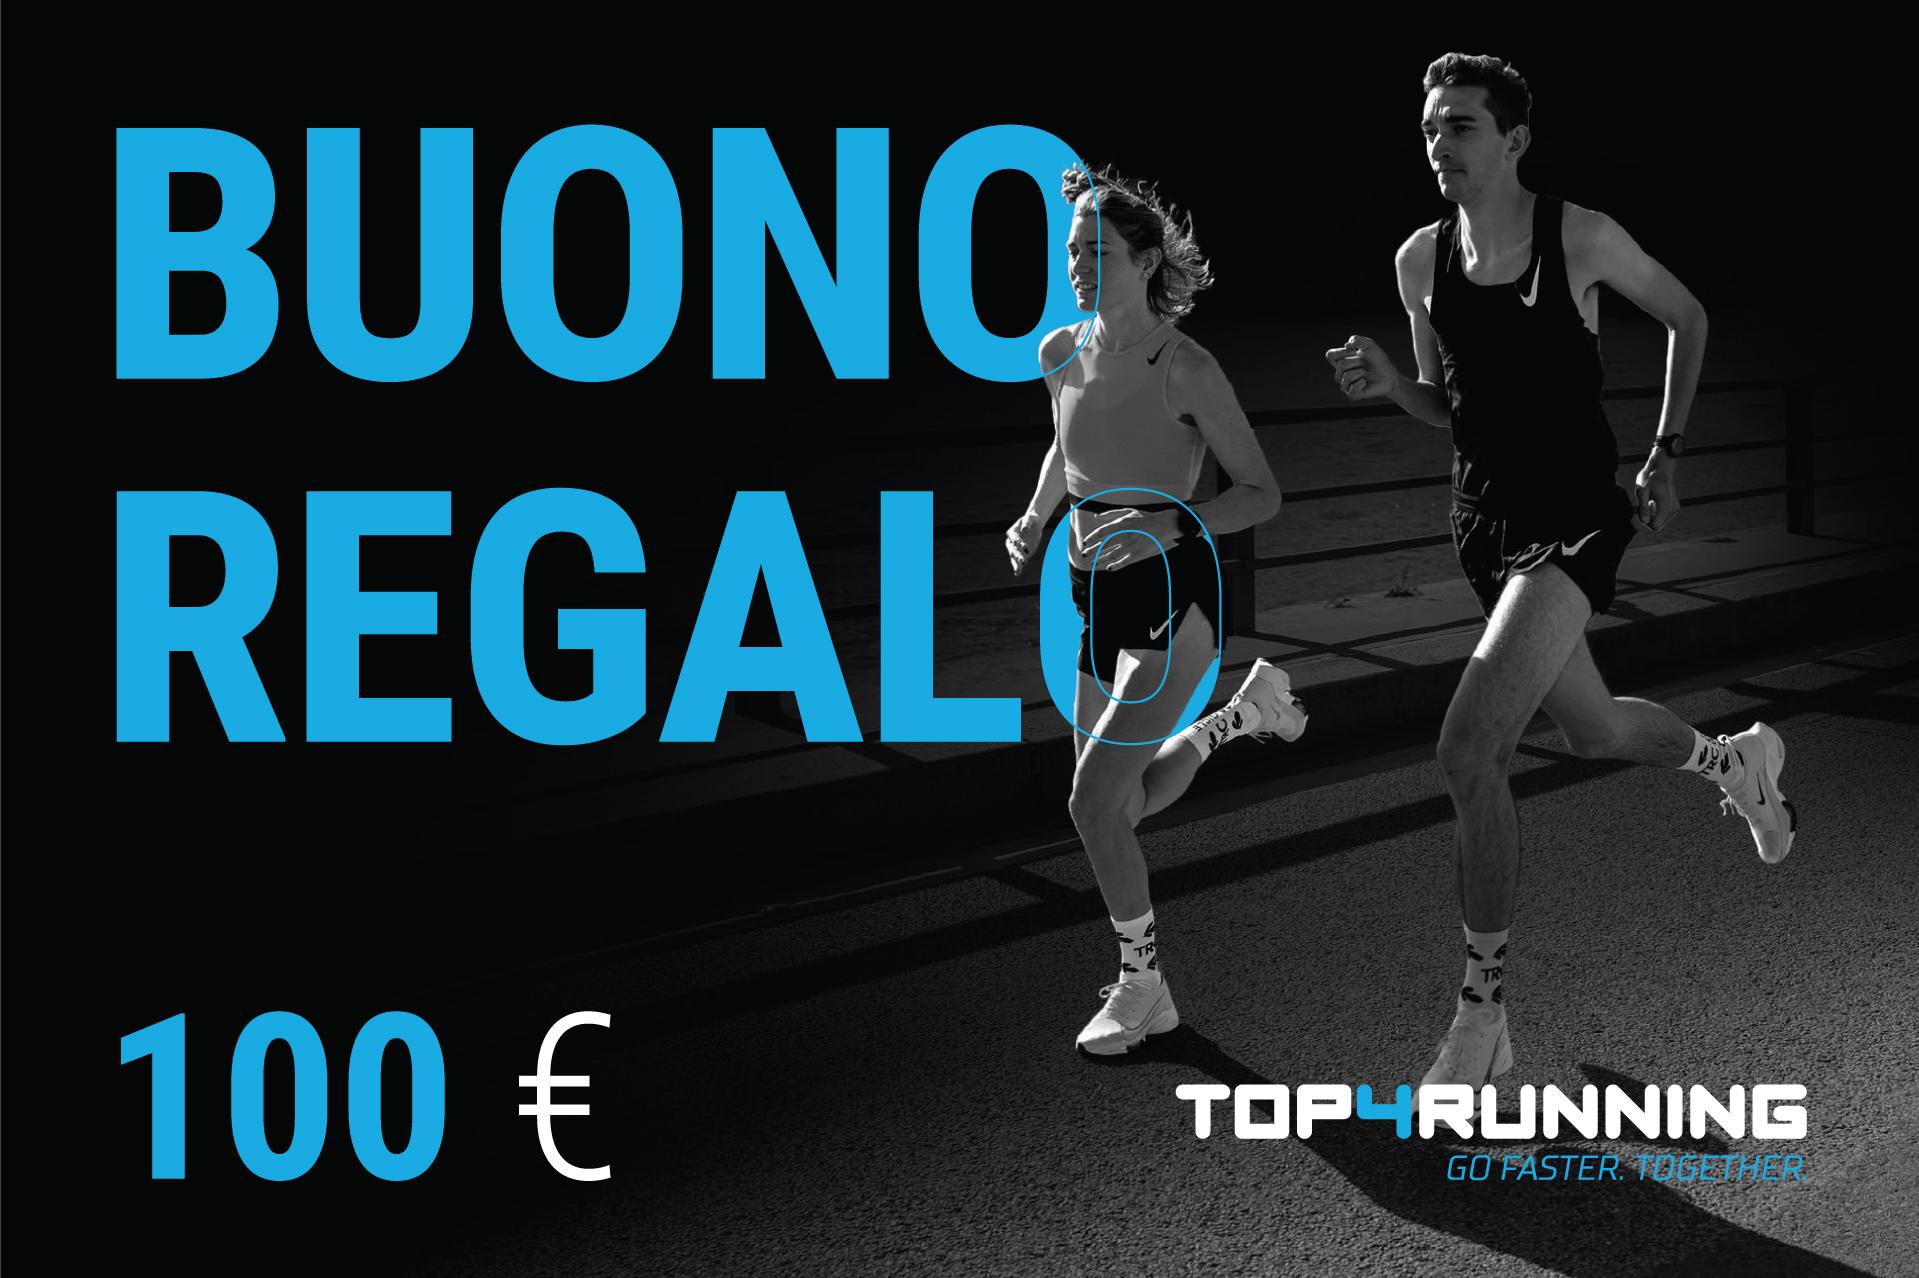 Top4running Buono regalo 100€